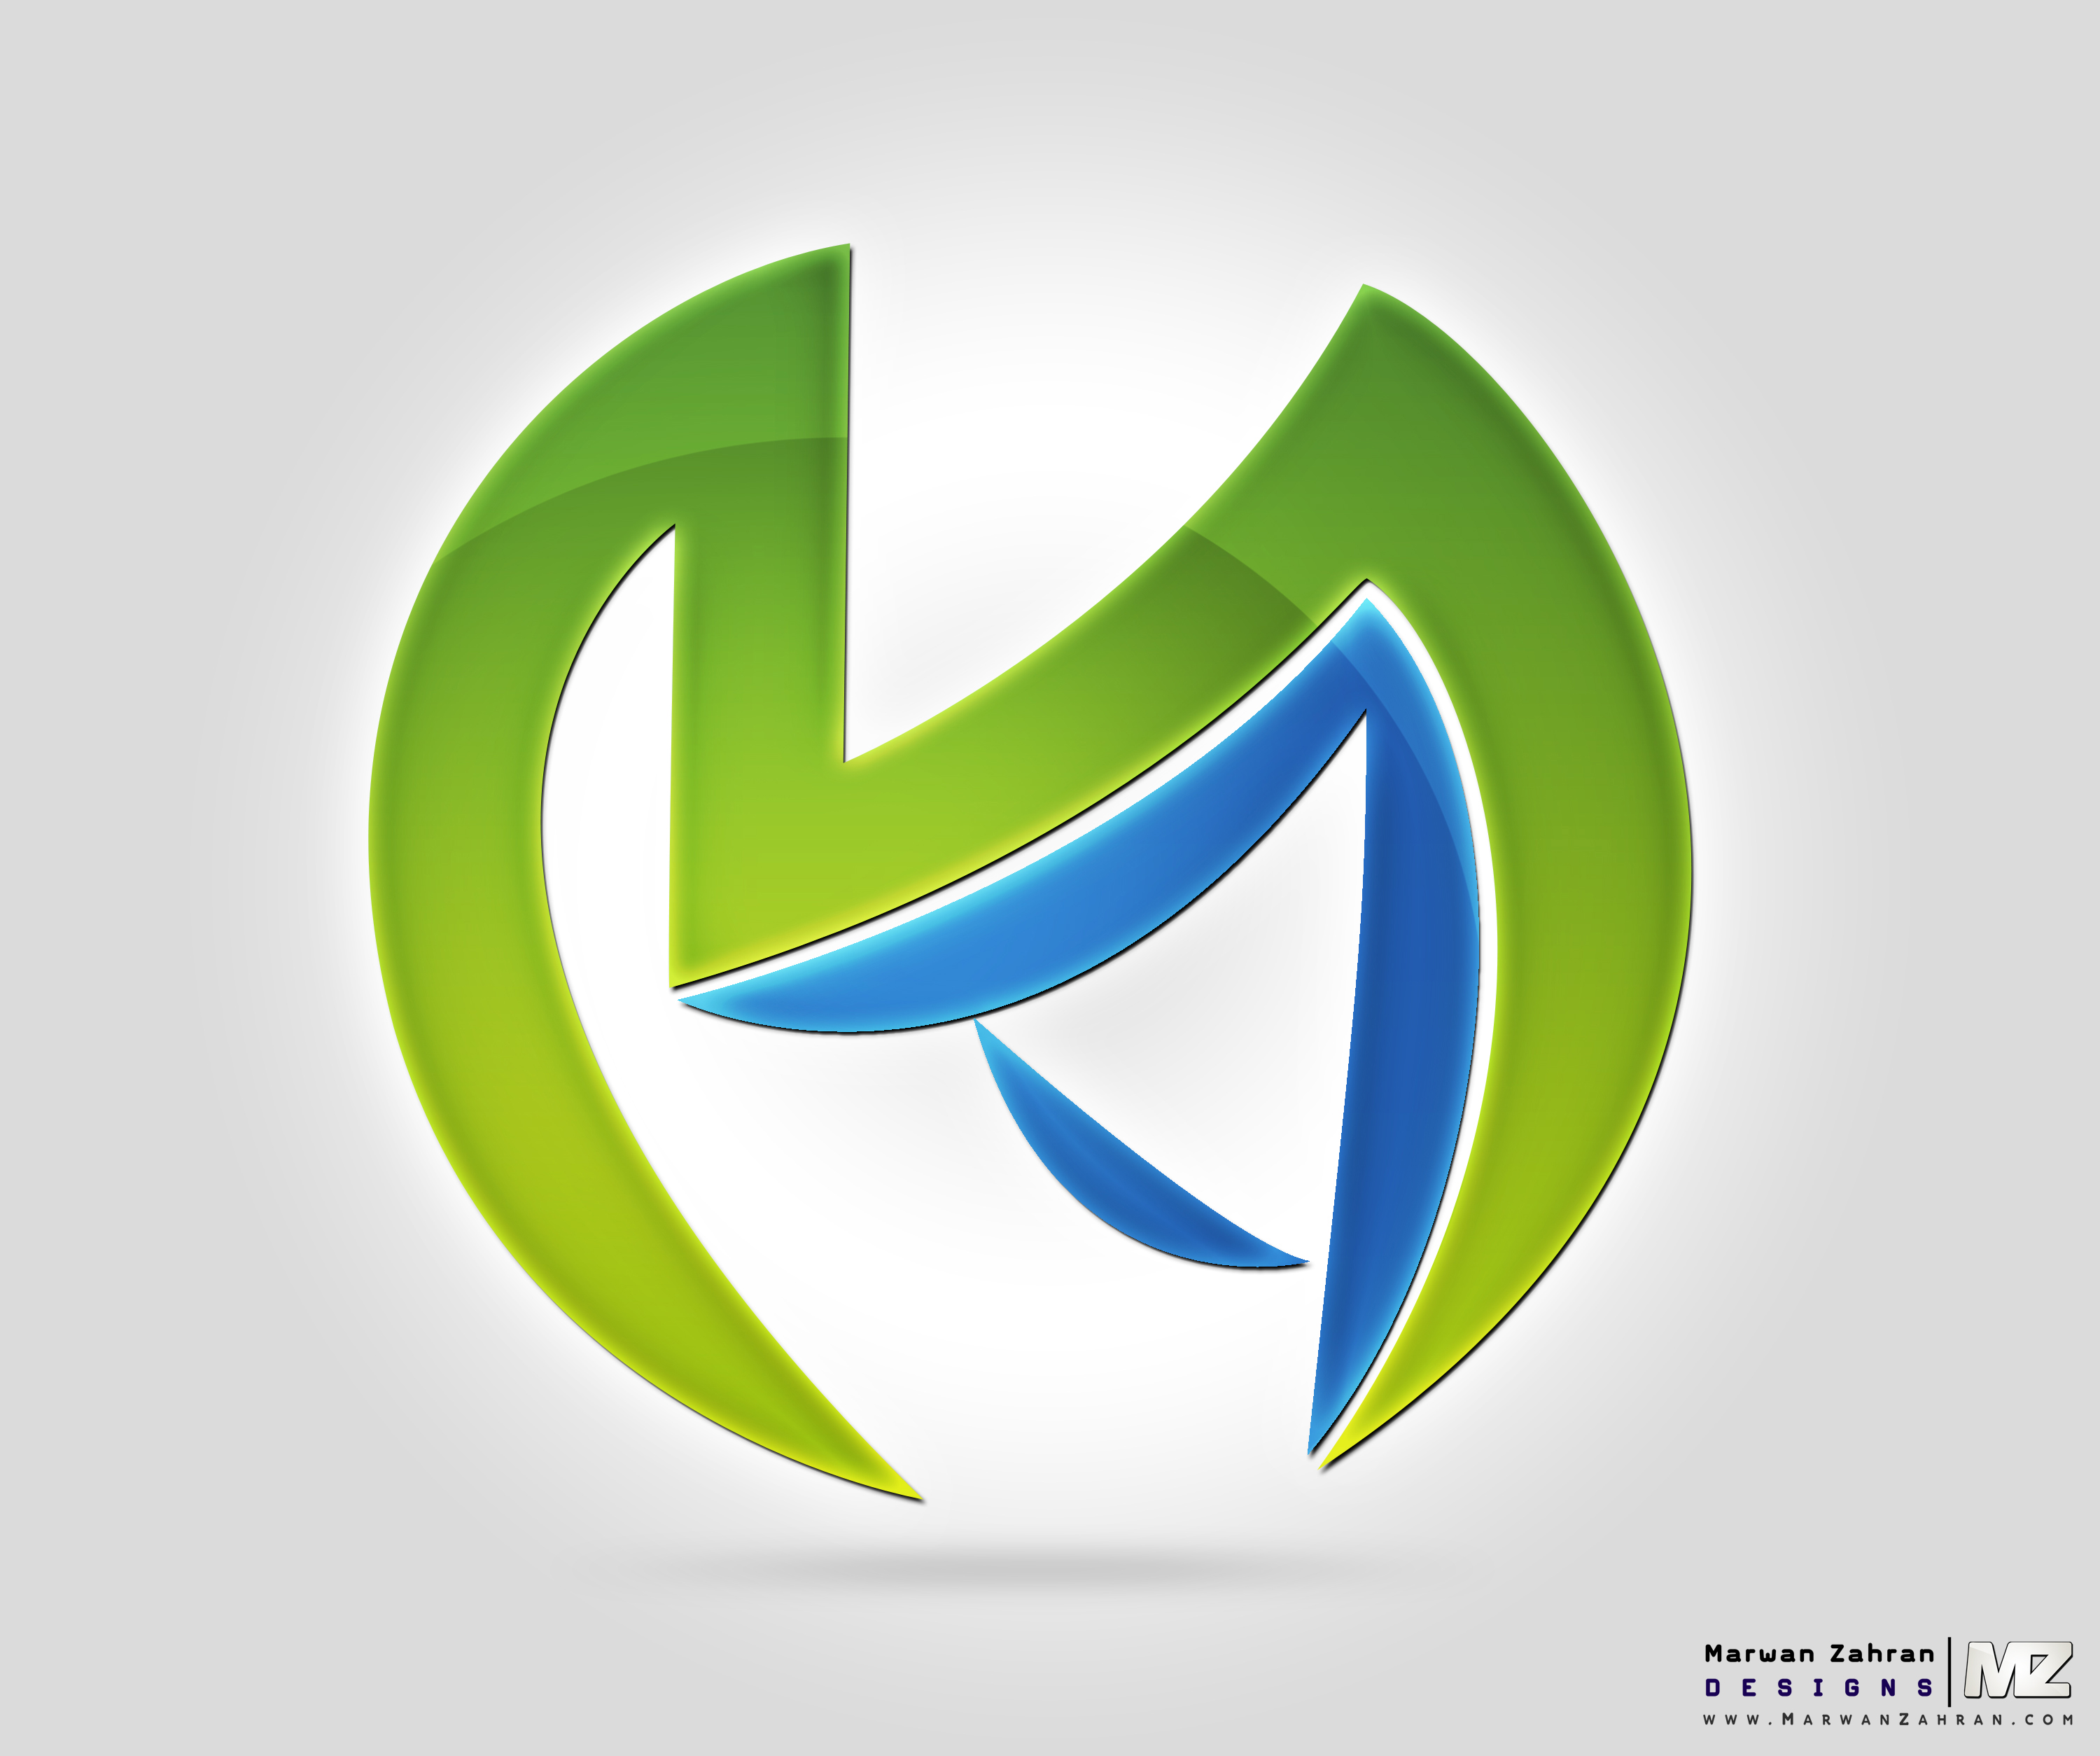 logos design by marwanzahran designs interfaces logos logotypes 2011 